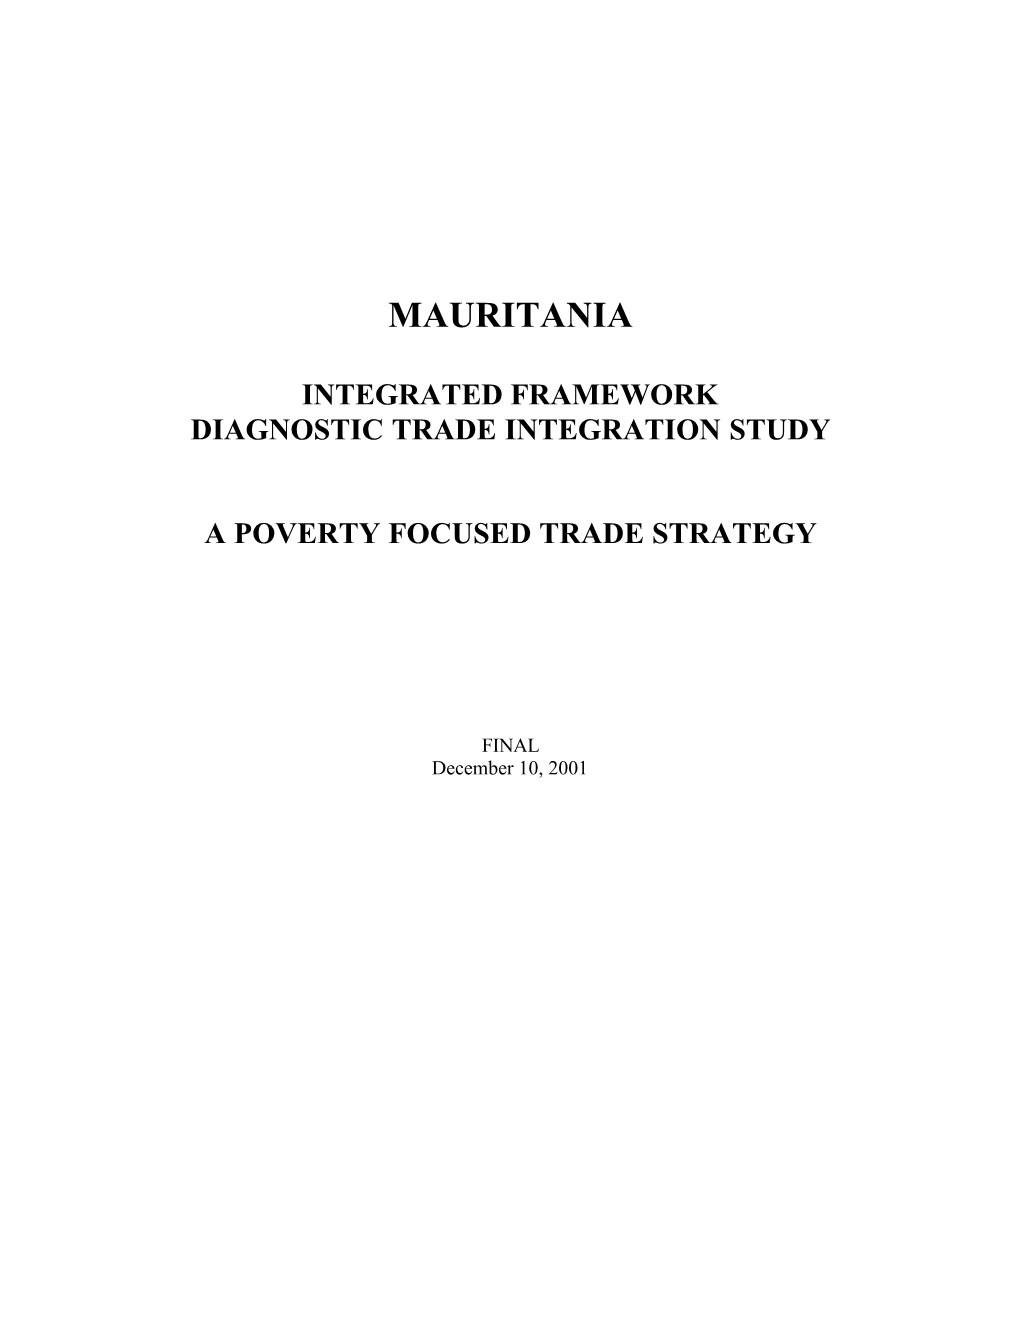 Mauritania Volume 1-E Dec 10